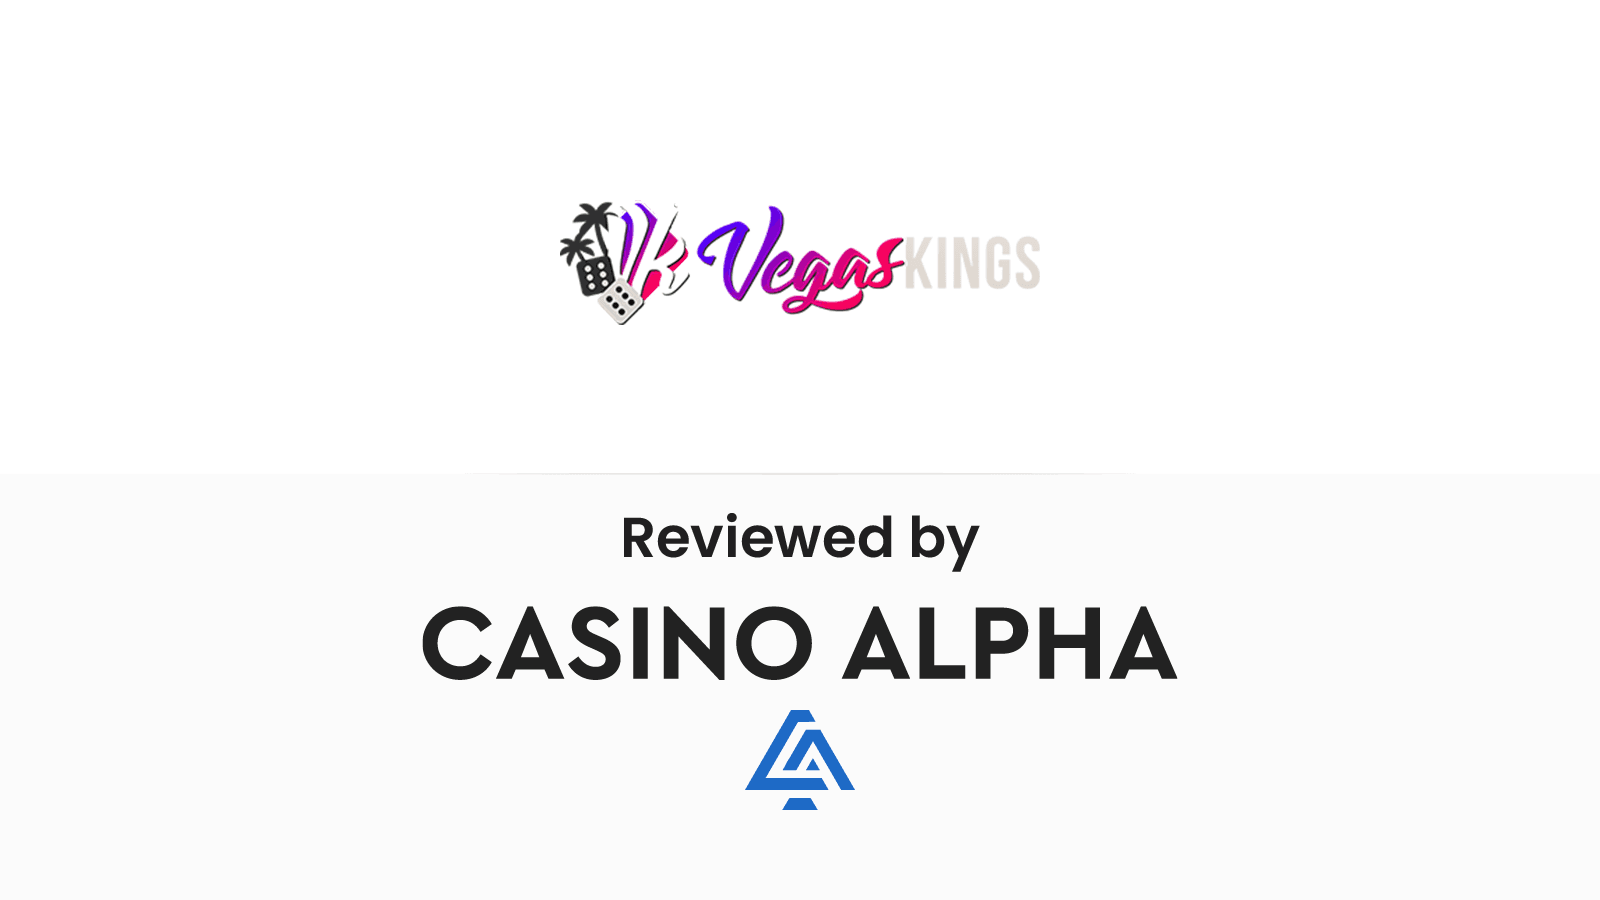 VegasKings Casino Review & Offers